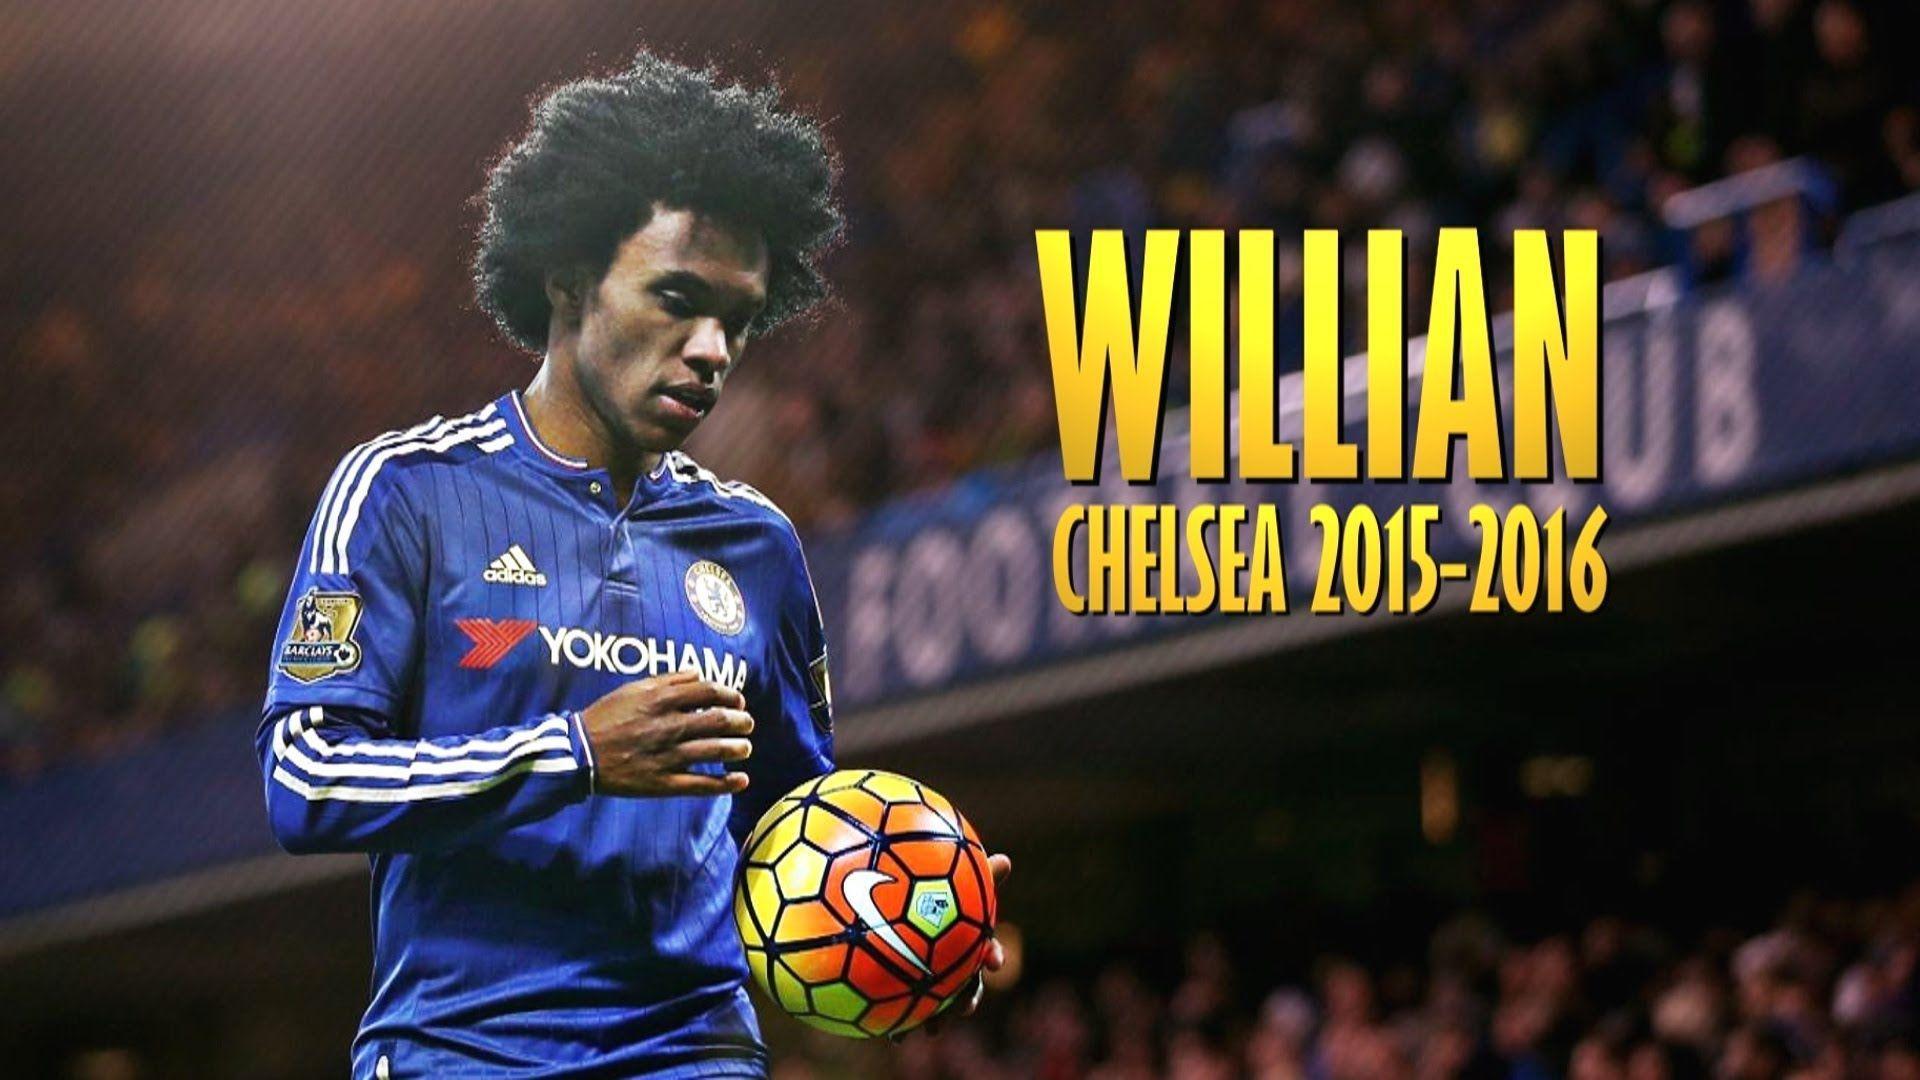 Willian Skills And Goals. Chelsea 2015 2016